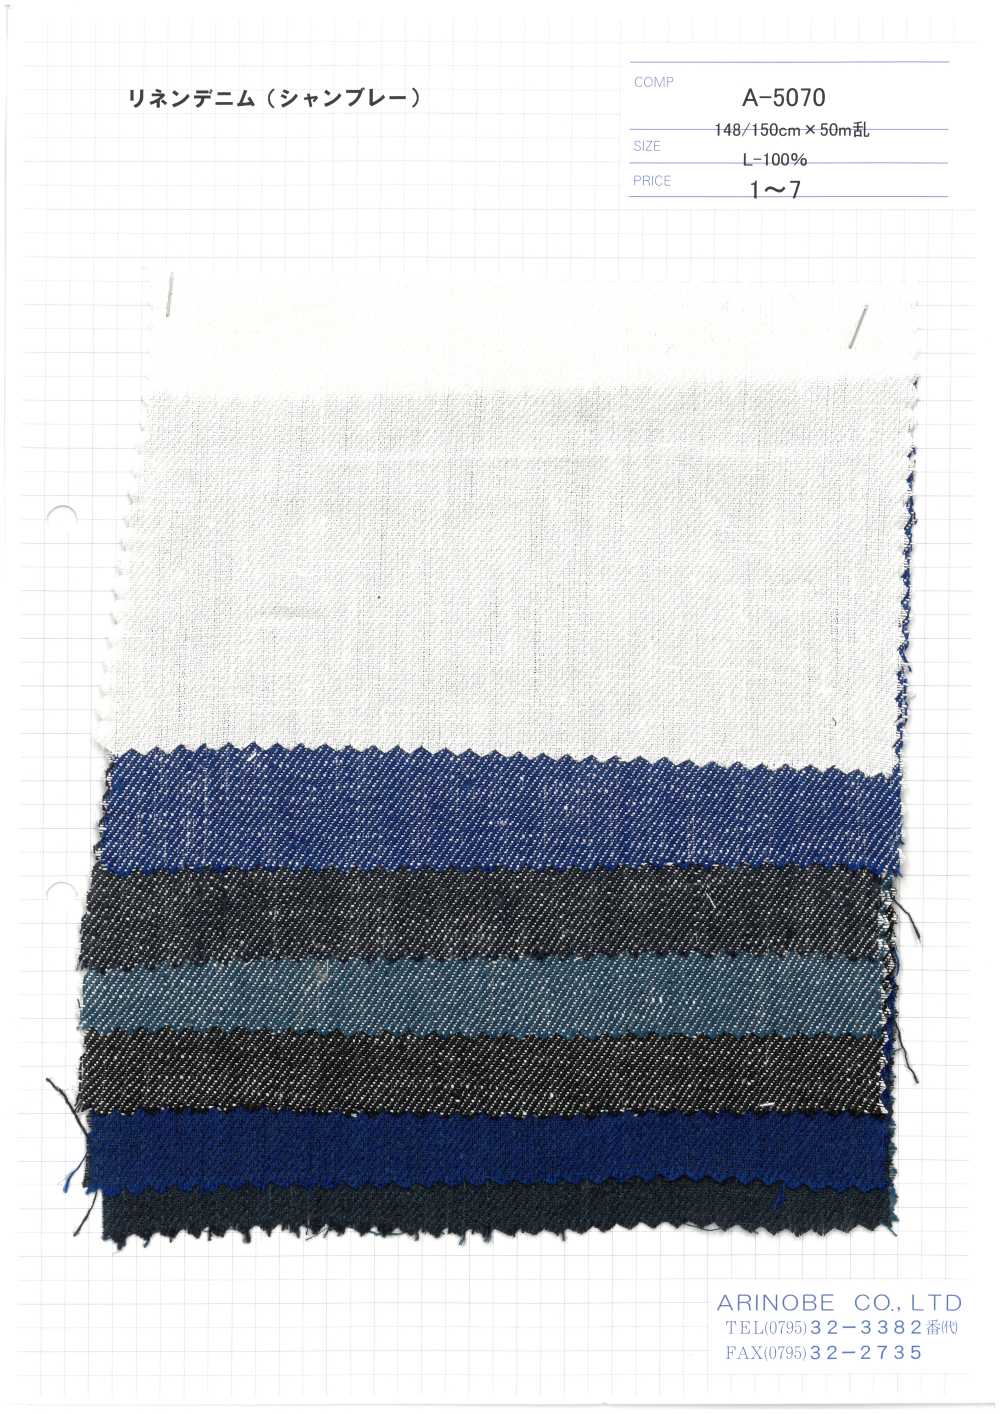 A-5070 Linen Denim (Chambray)[Textile / Fabric] ARINOBE CO., LTD.